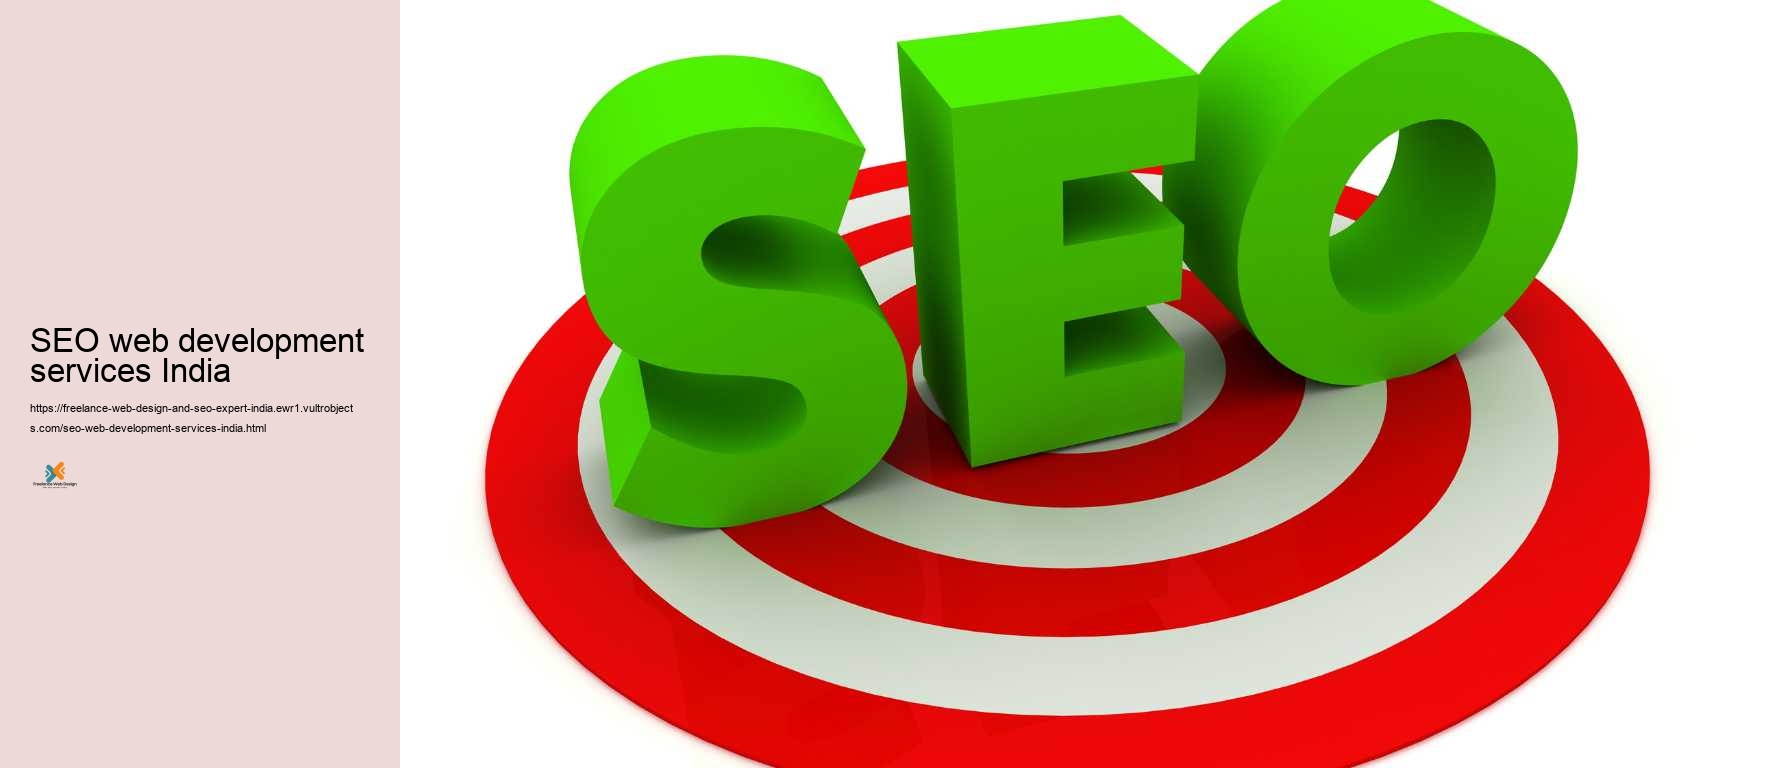 SEO web development services India